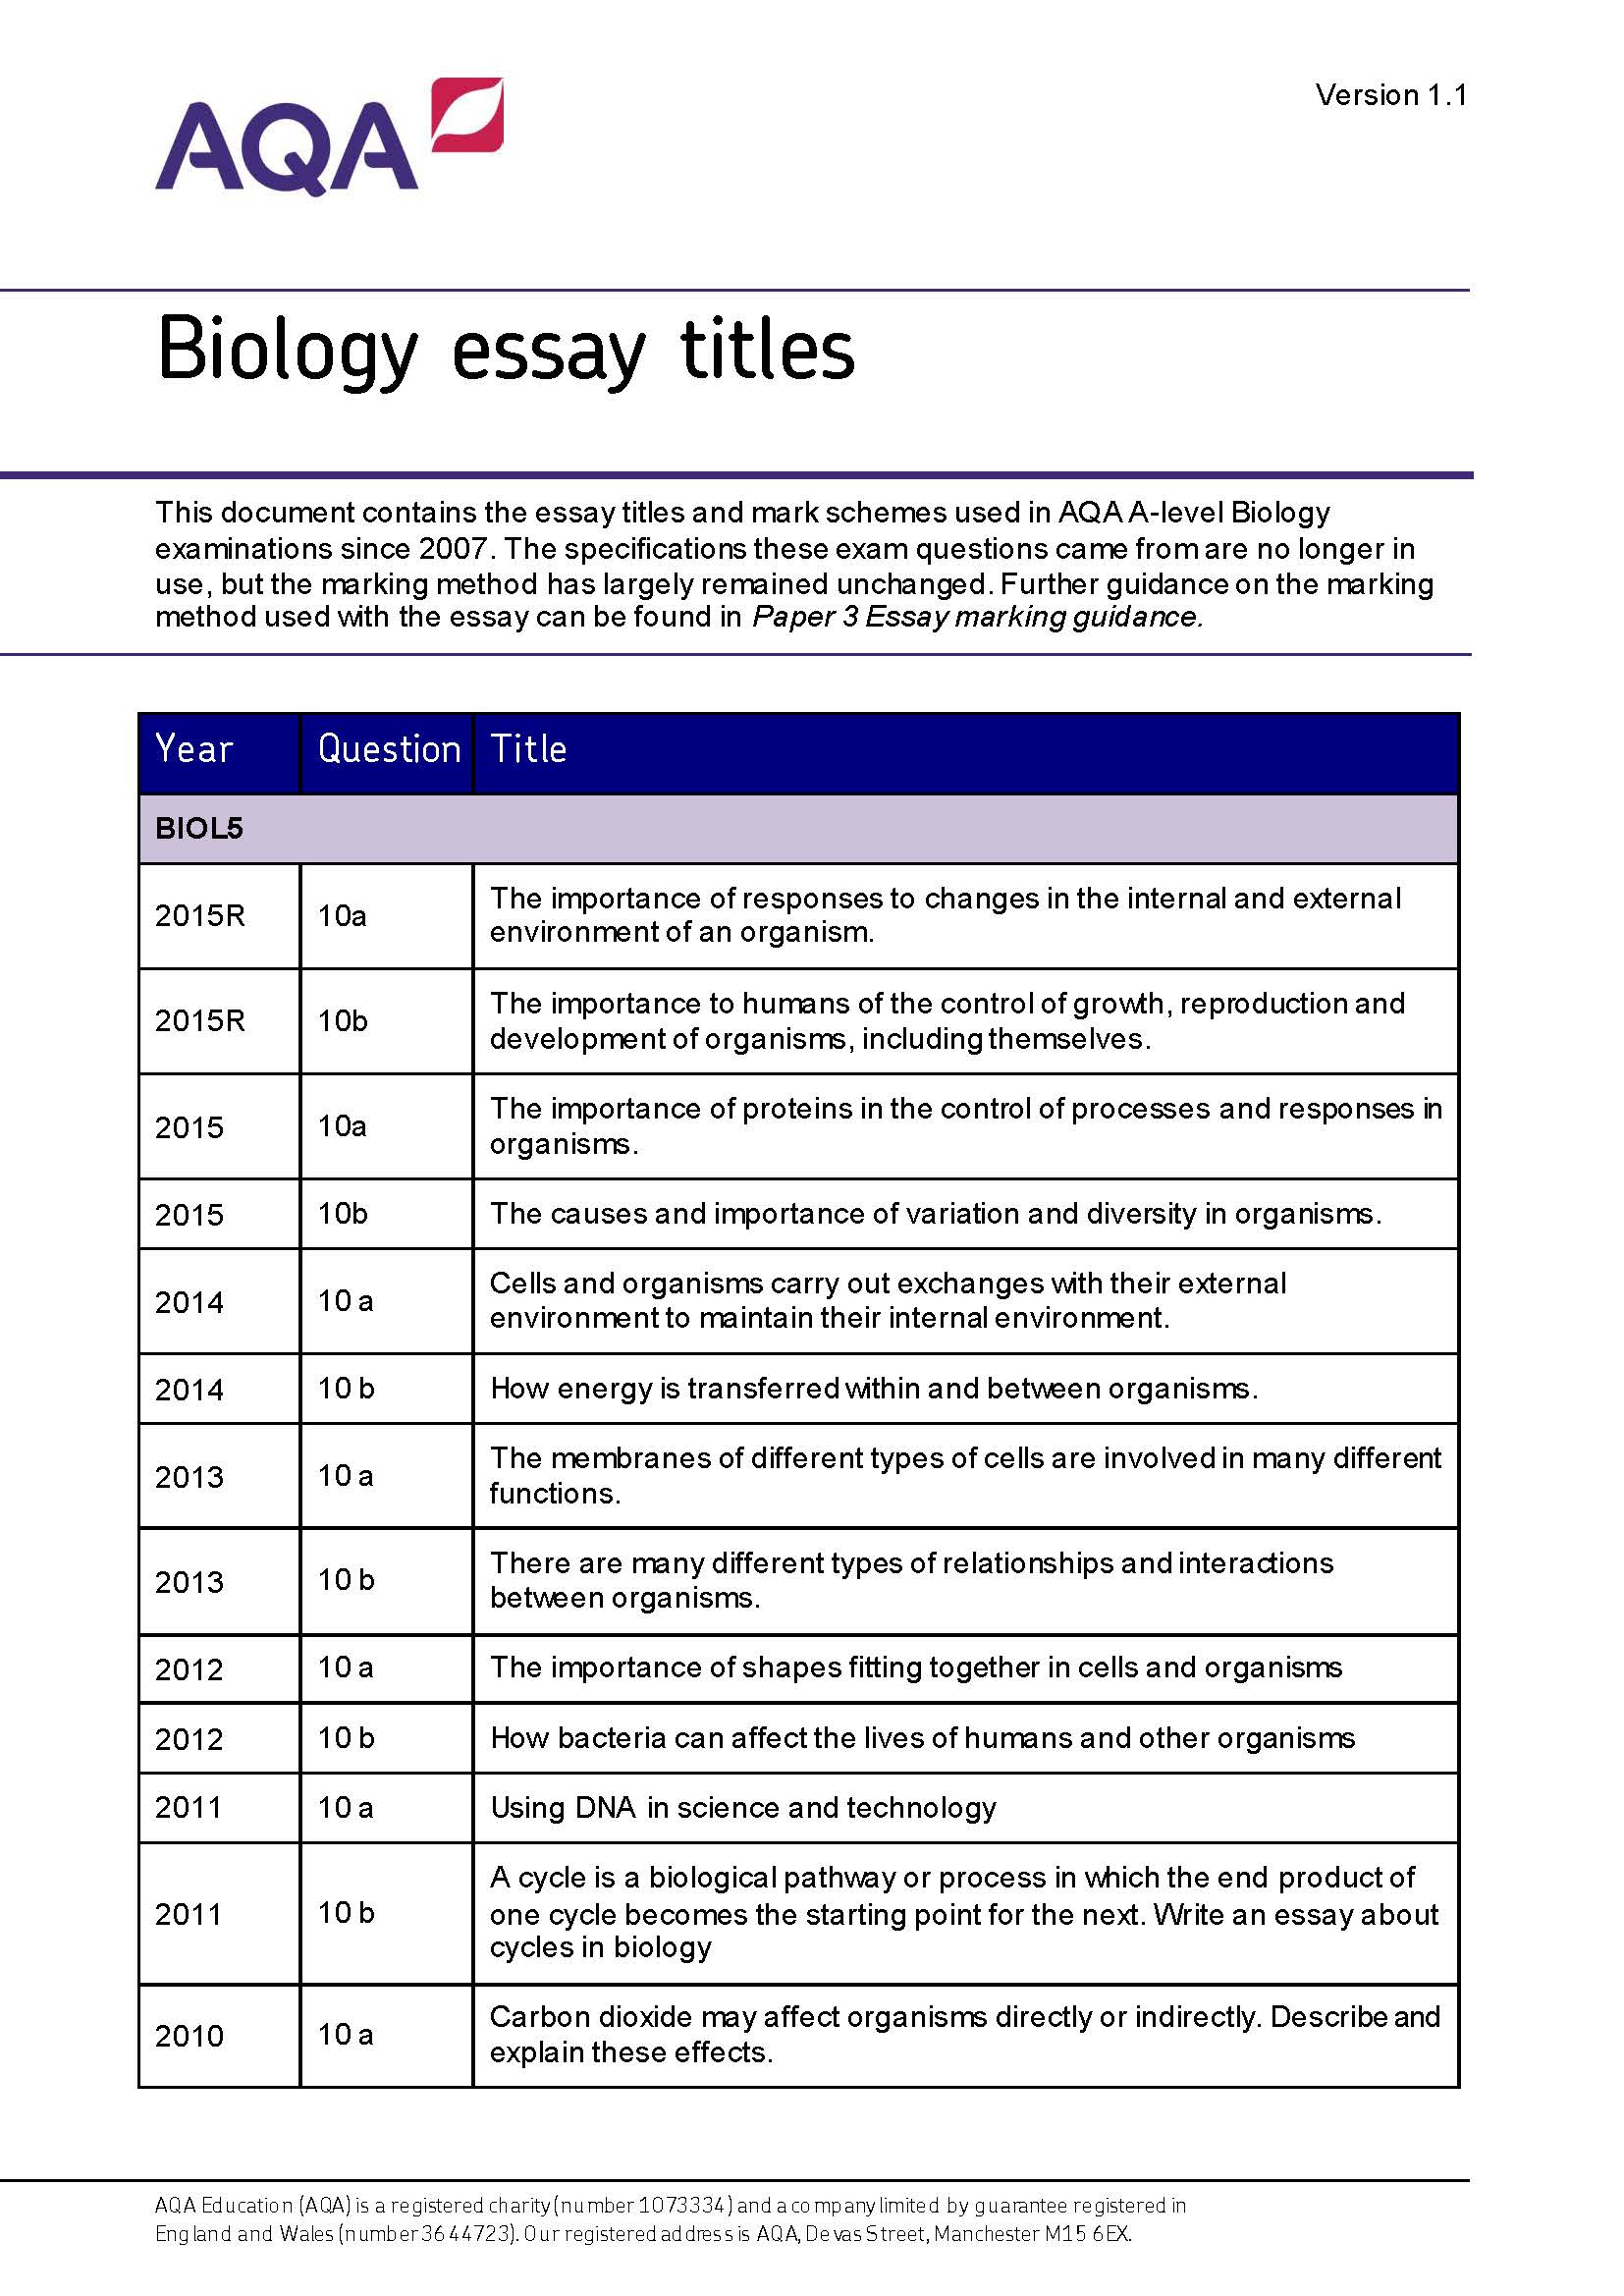 essay titles biology aqa